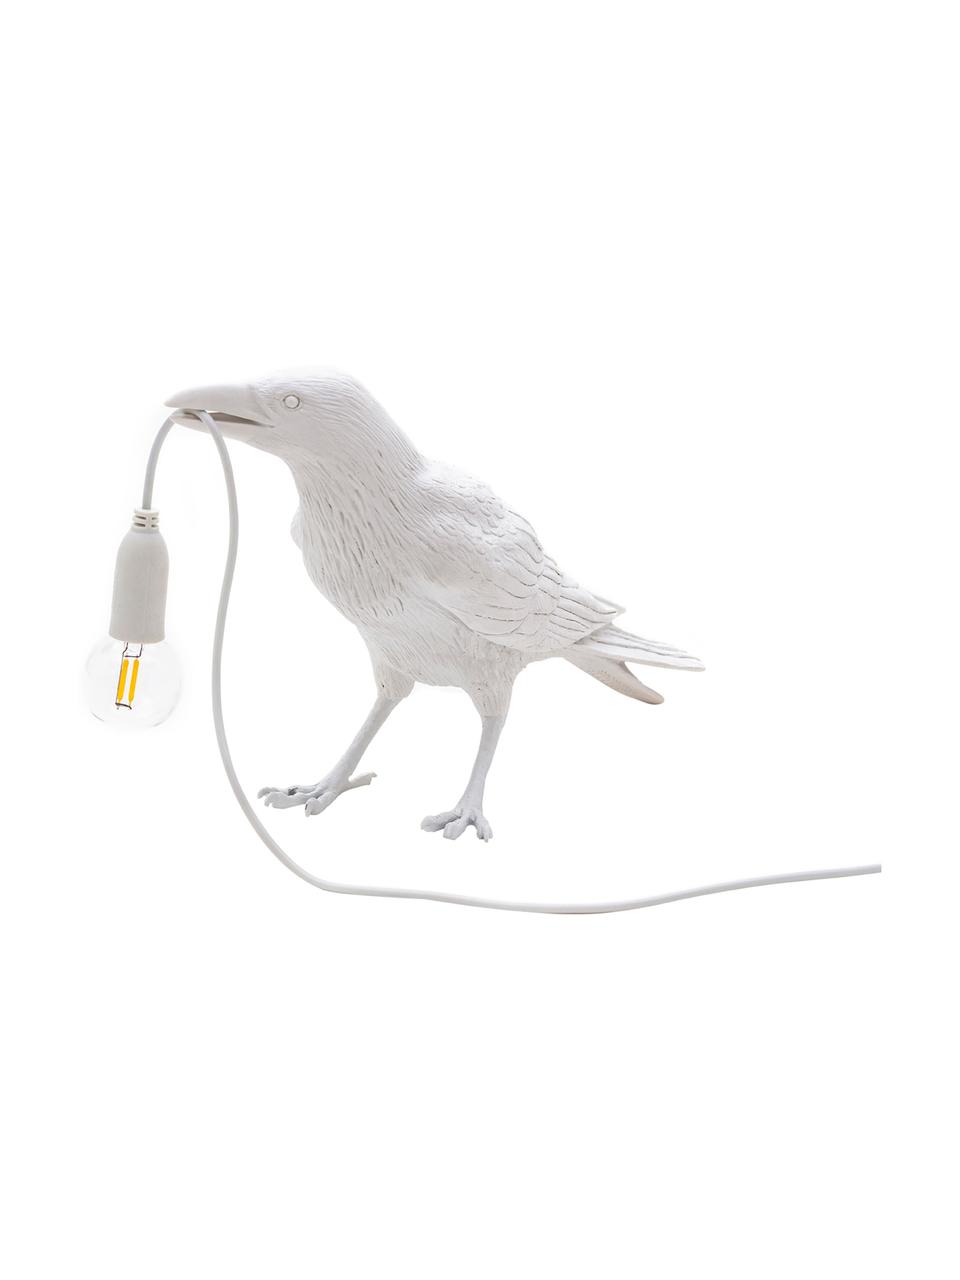 Lampe à poser design Bird, Blanc